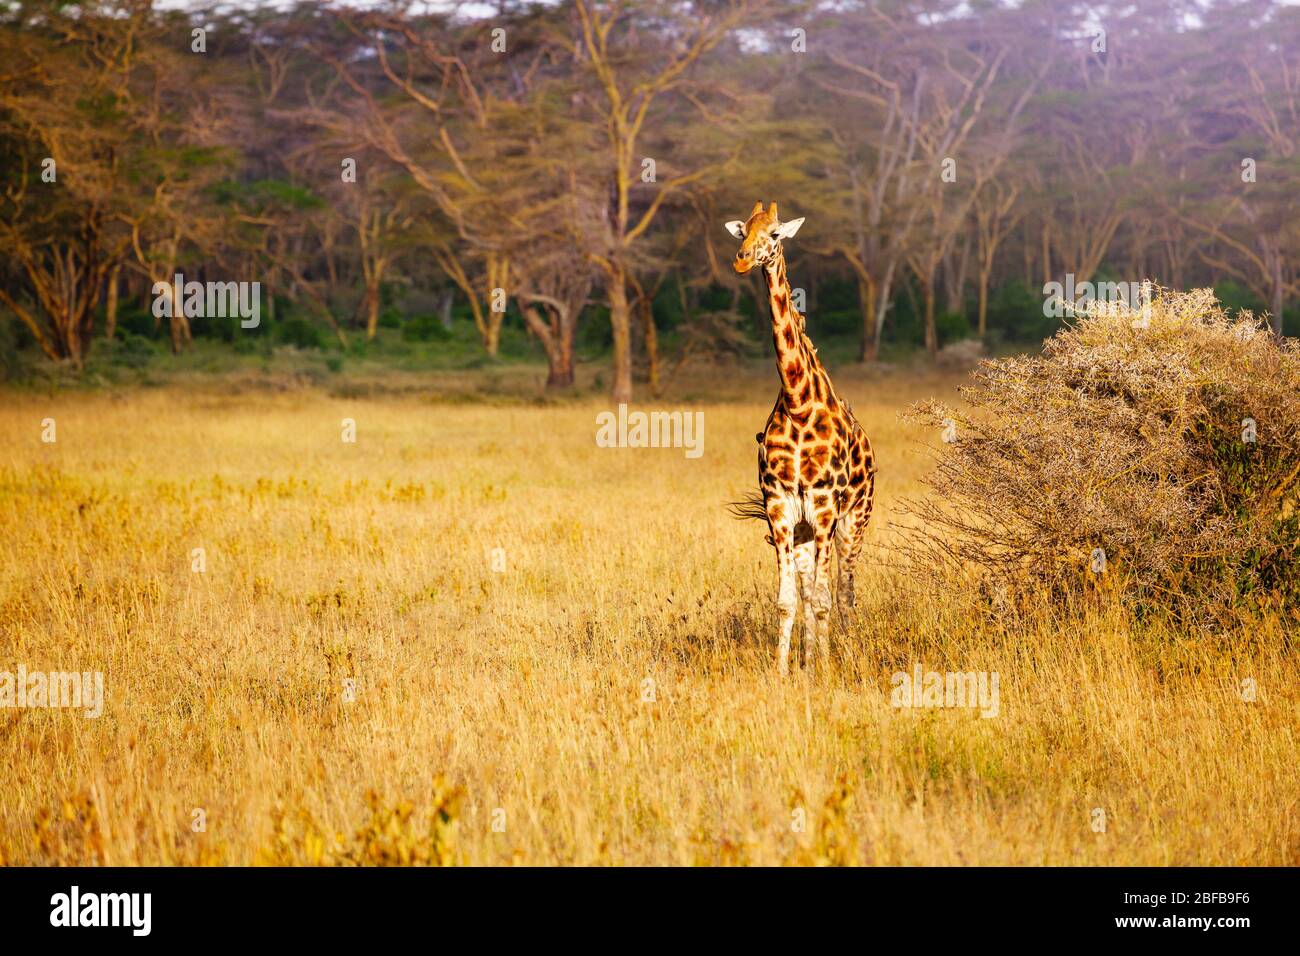 Front view of adult giraffe in Kenya savanna of Amboseli park Stock Photo